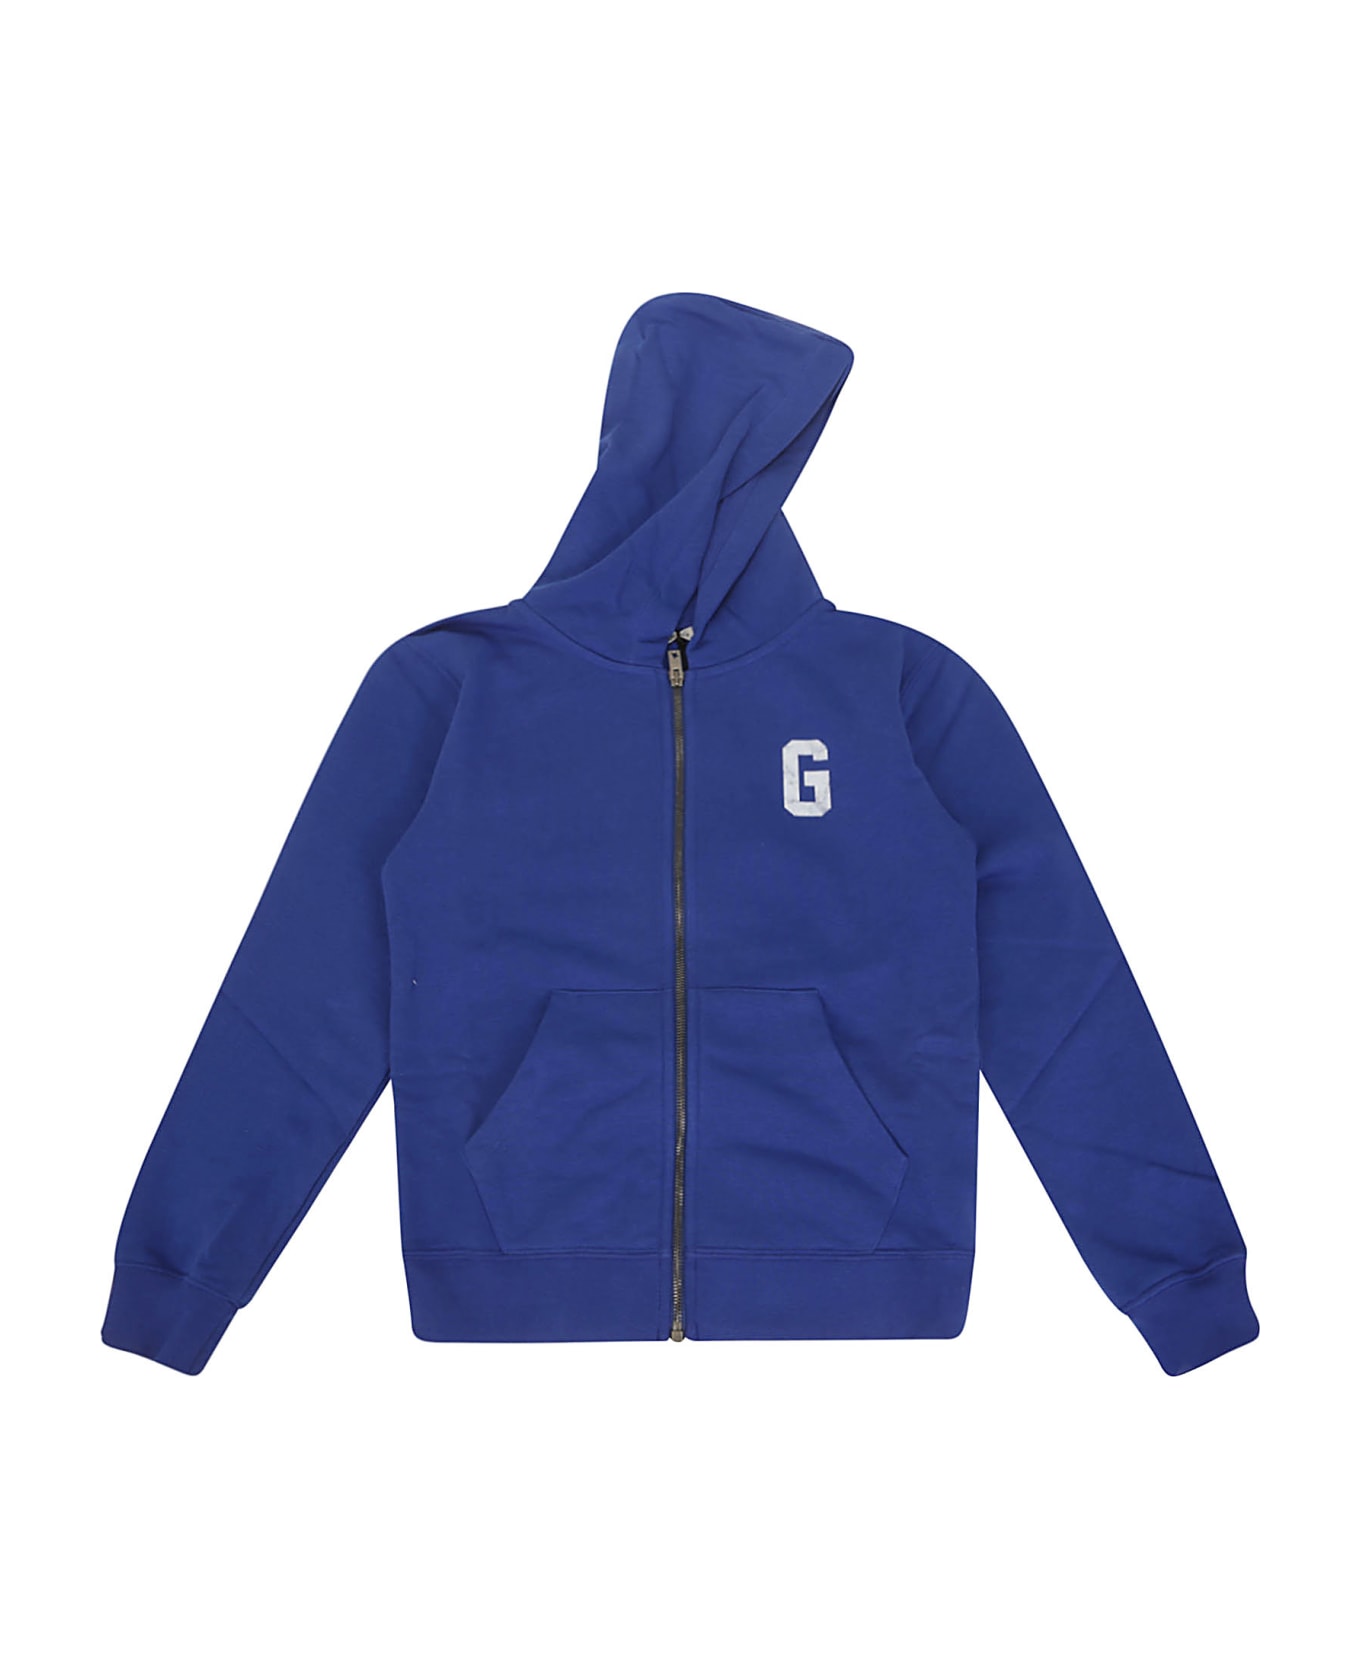 Golden Goose Journey/ Boy's Zipped Sweatshirt Hoodie - MAZARINE BLUE